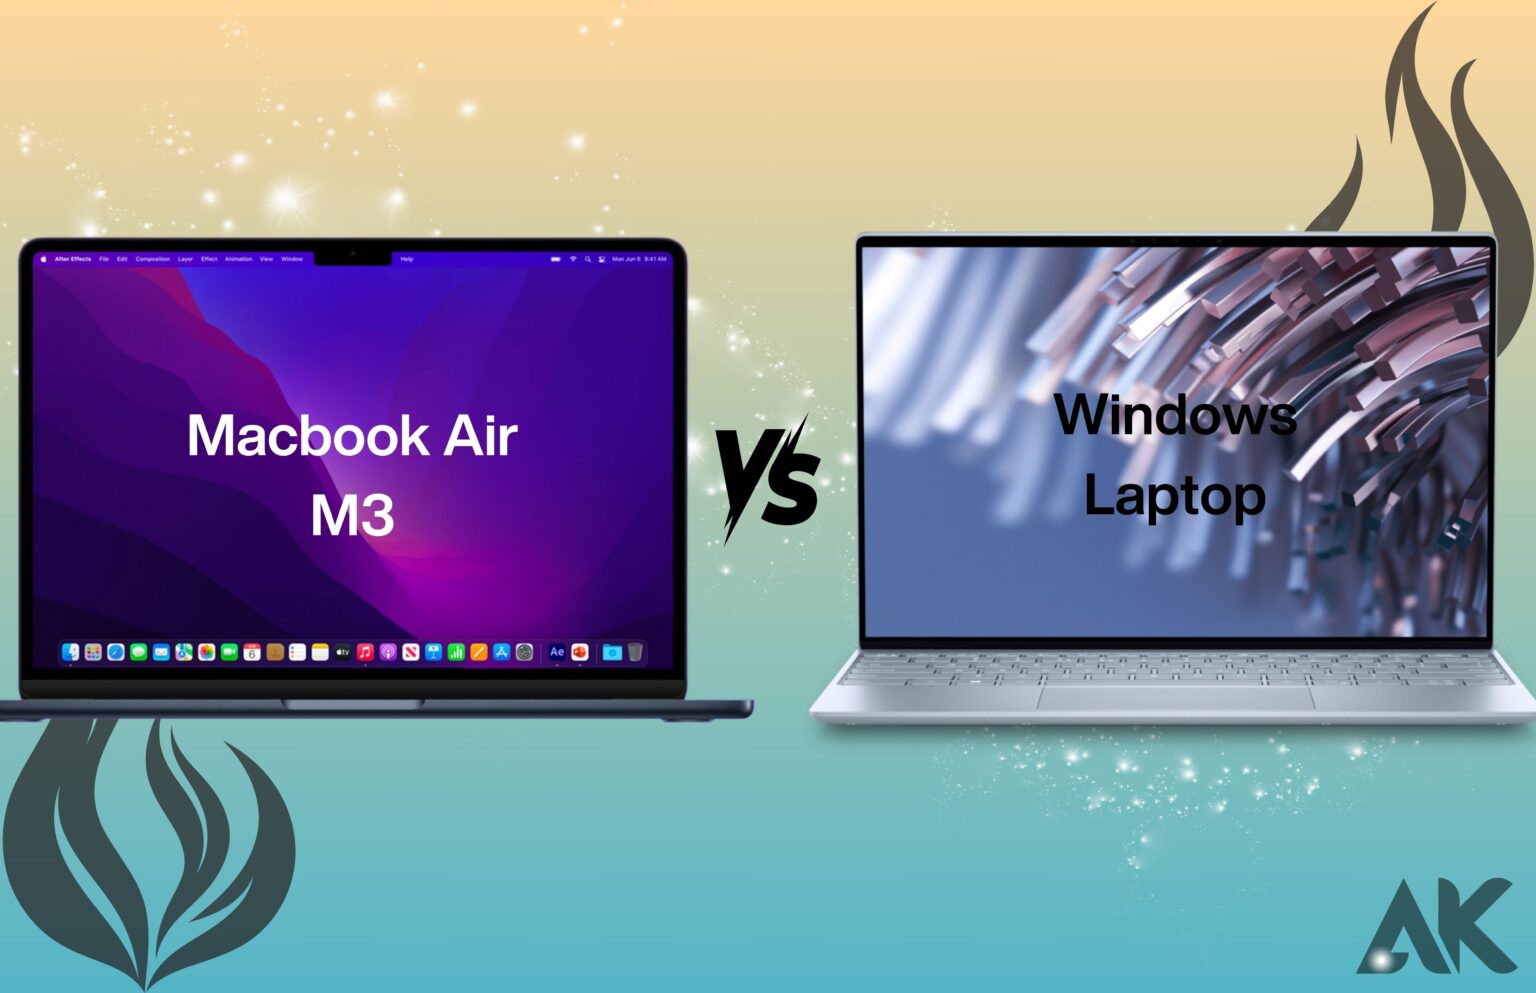 The Hypothetical Showdown 15-inch Macbook Air M3 vs Windows Laptop